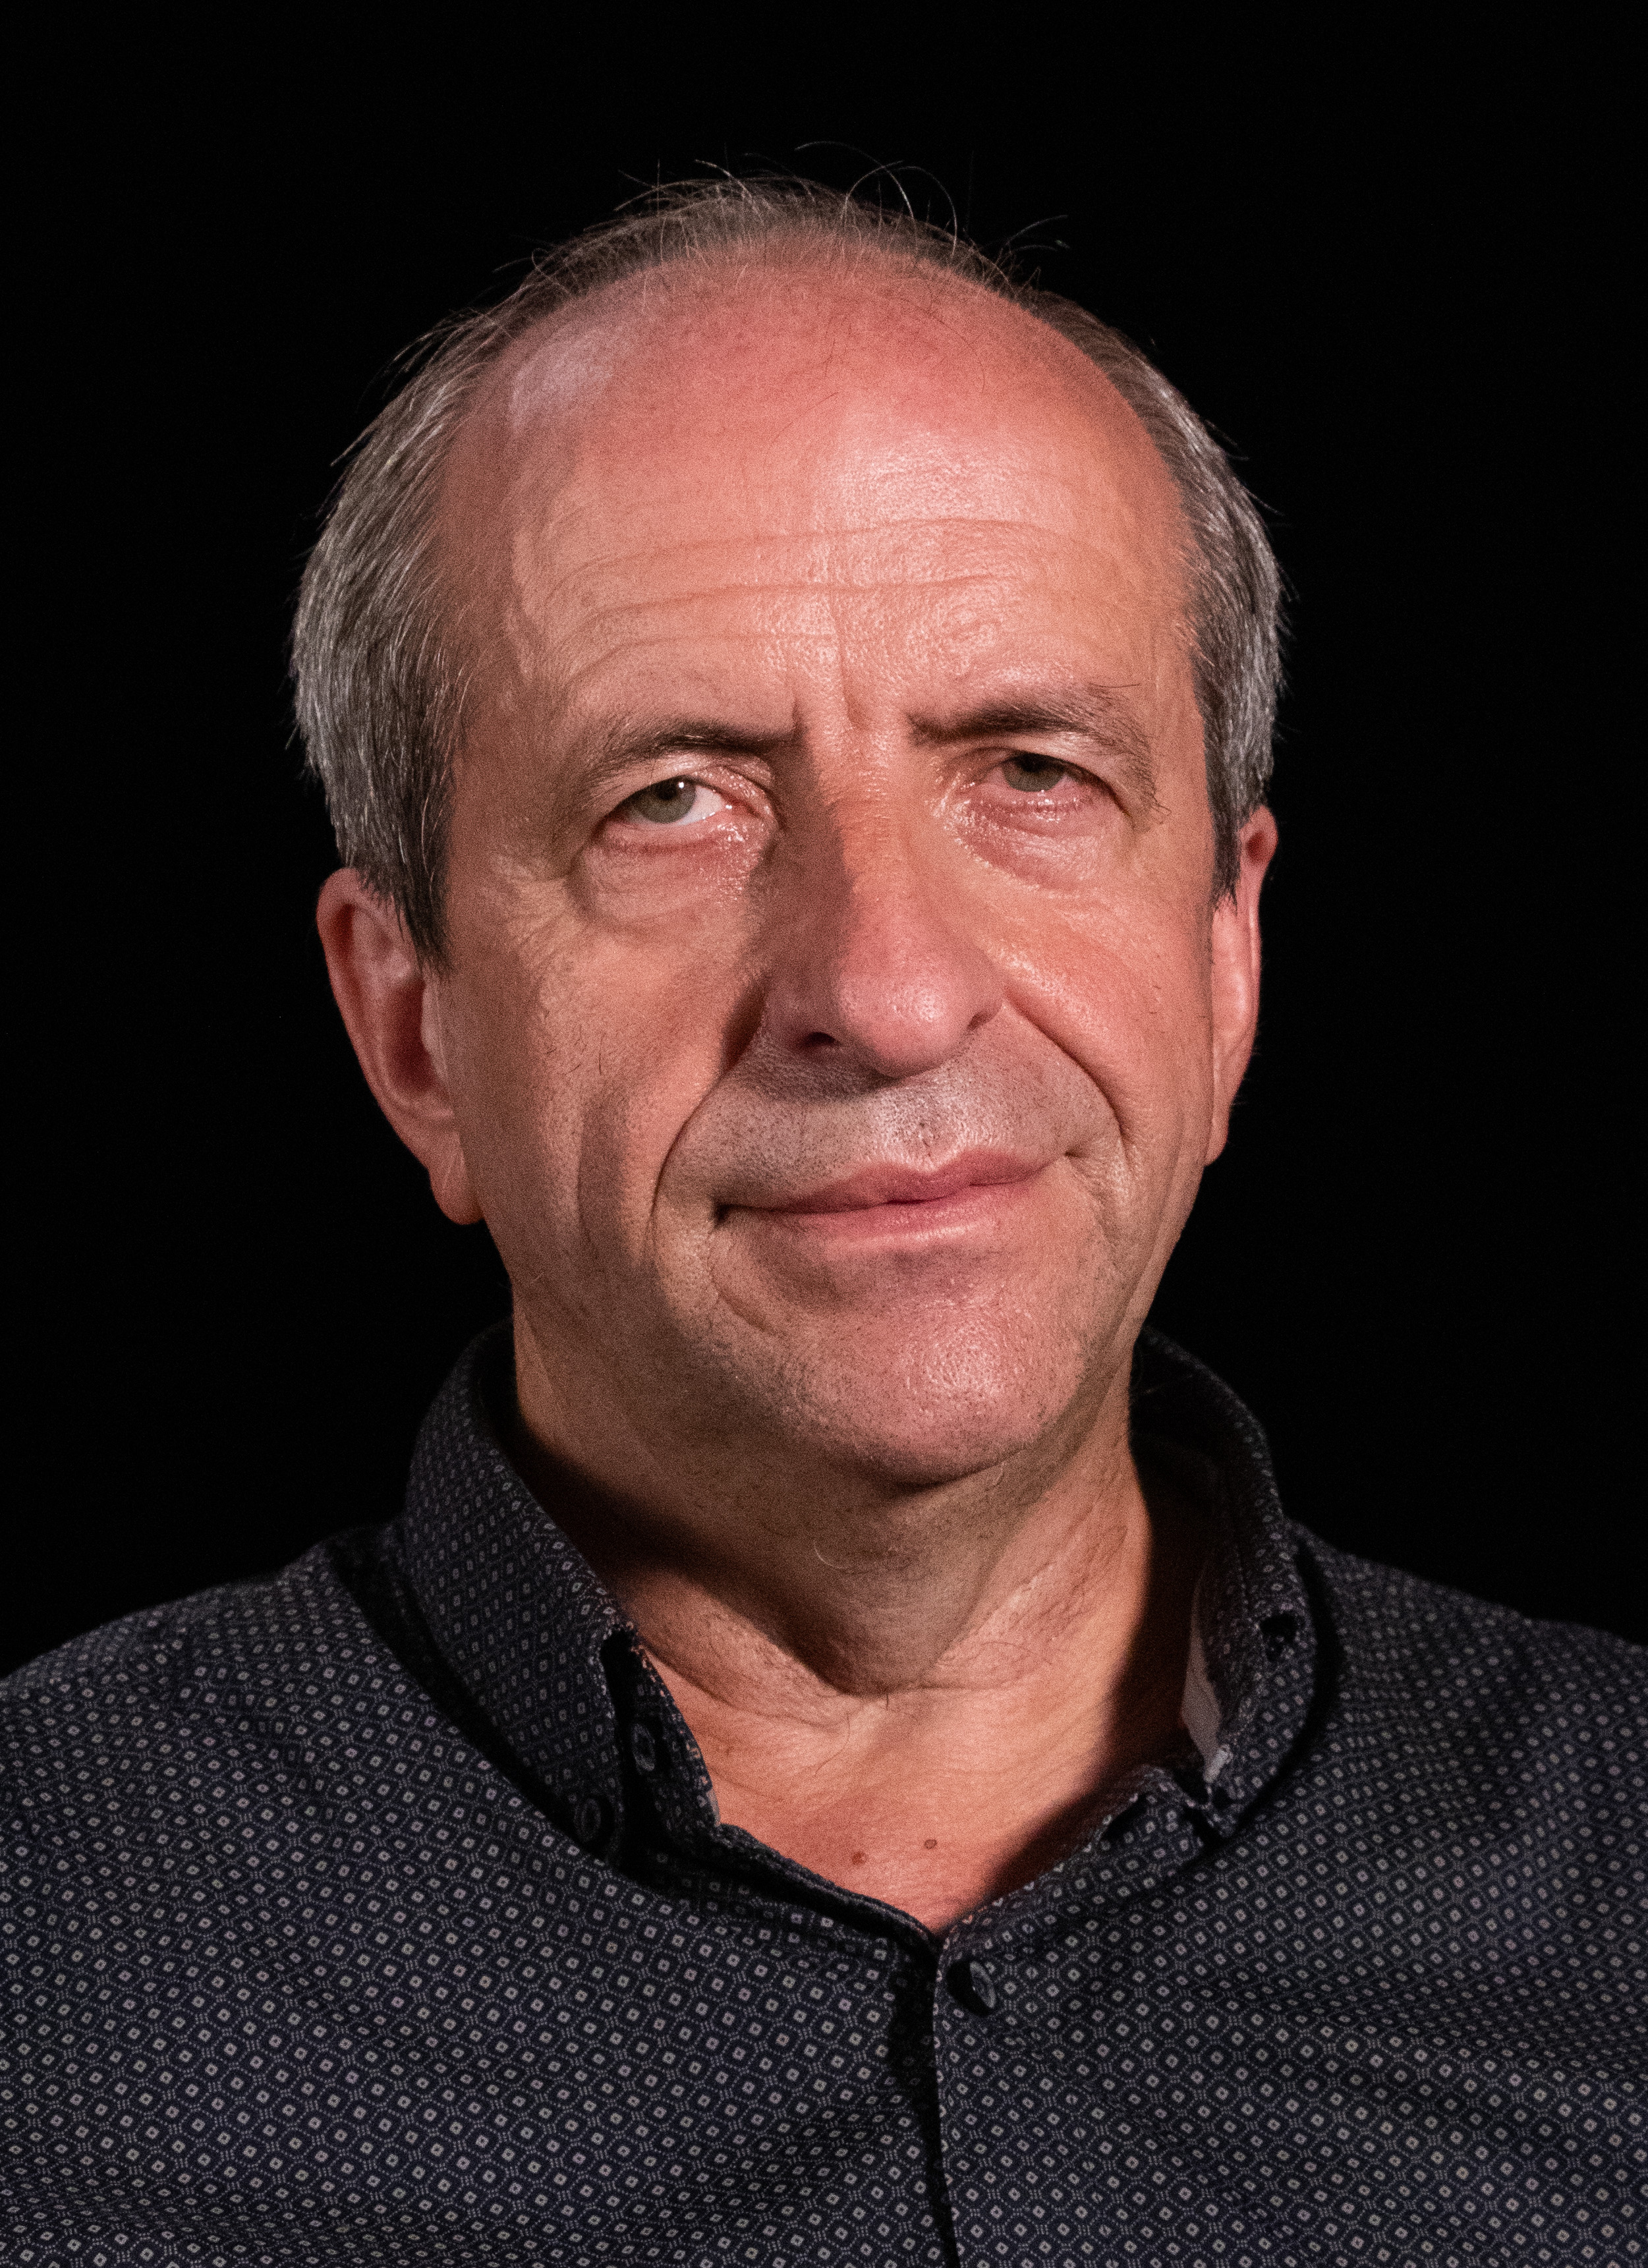 Tomáš Holenda in August 2019